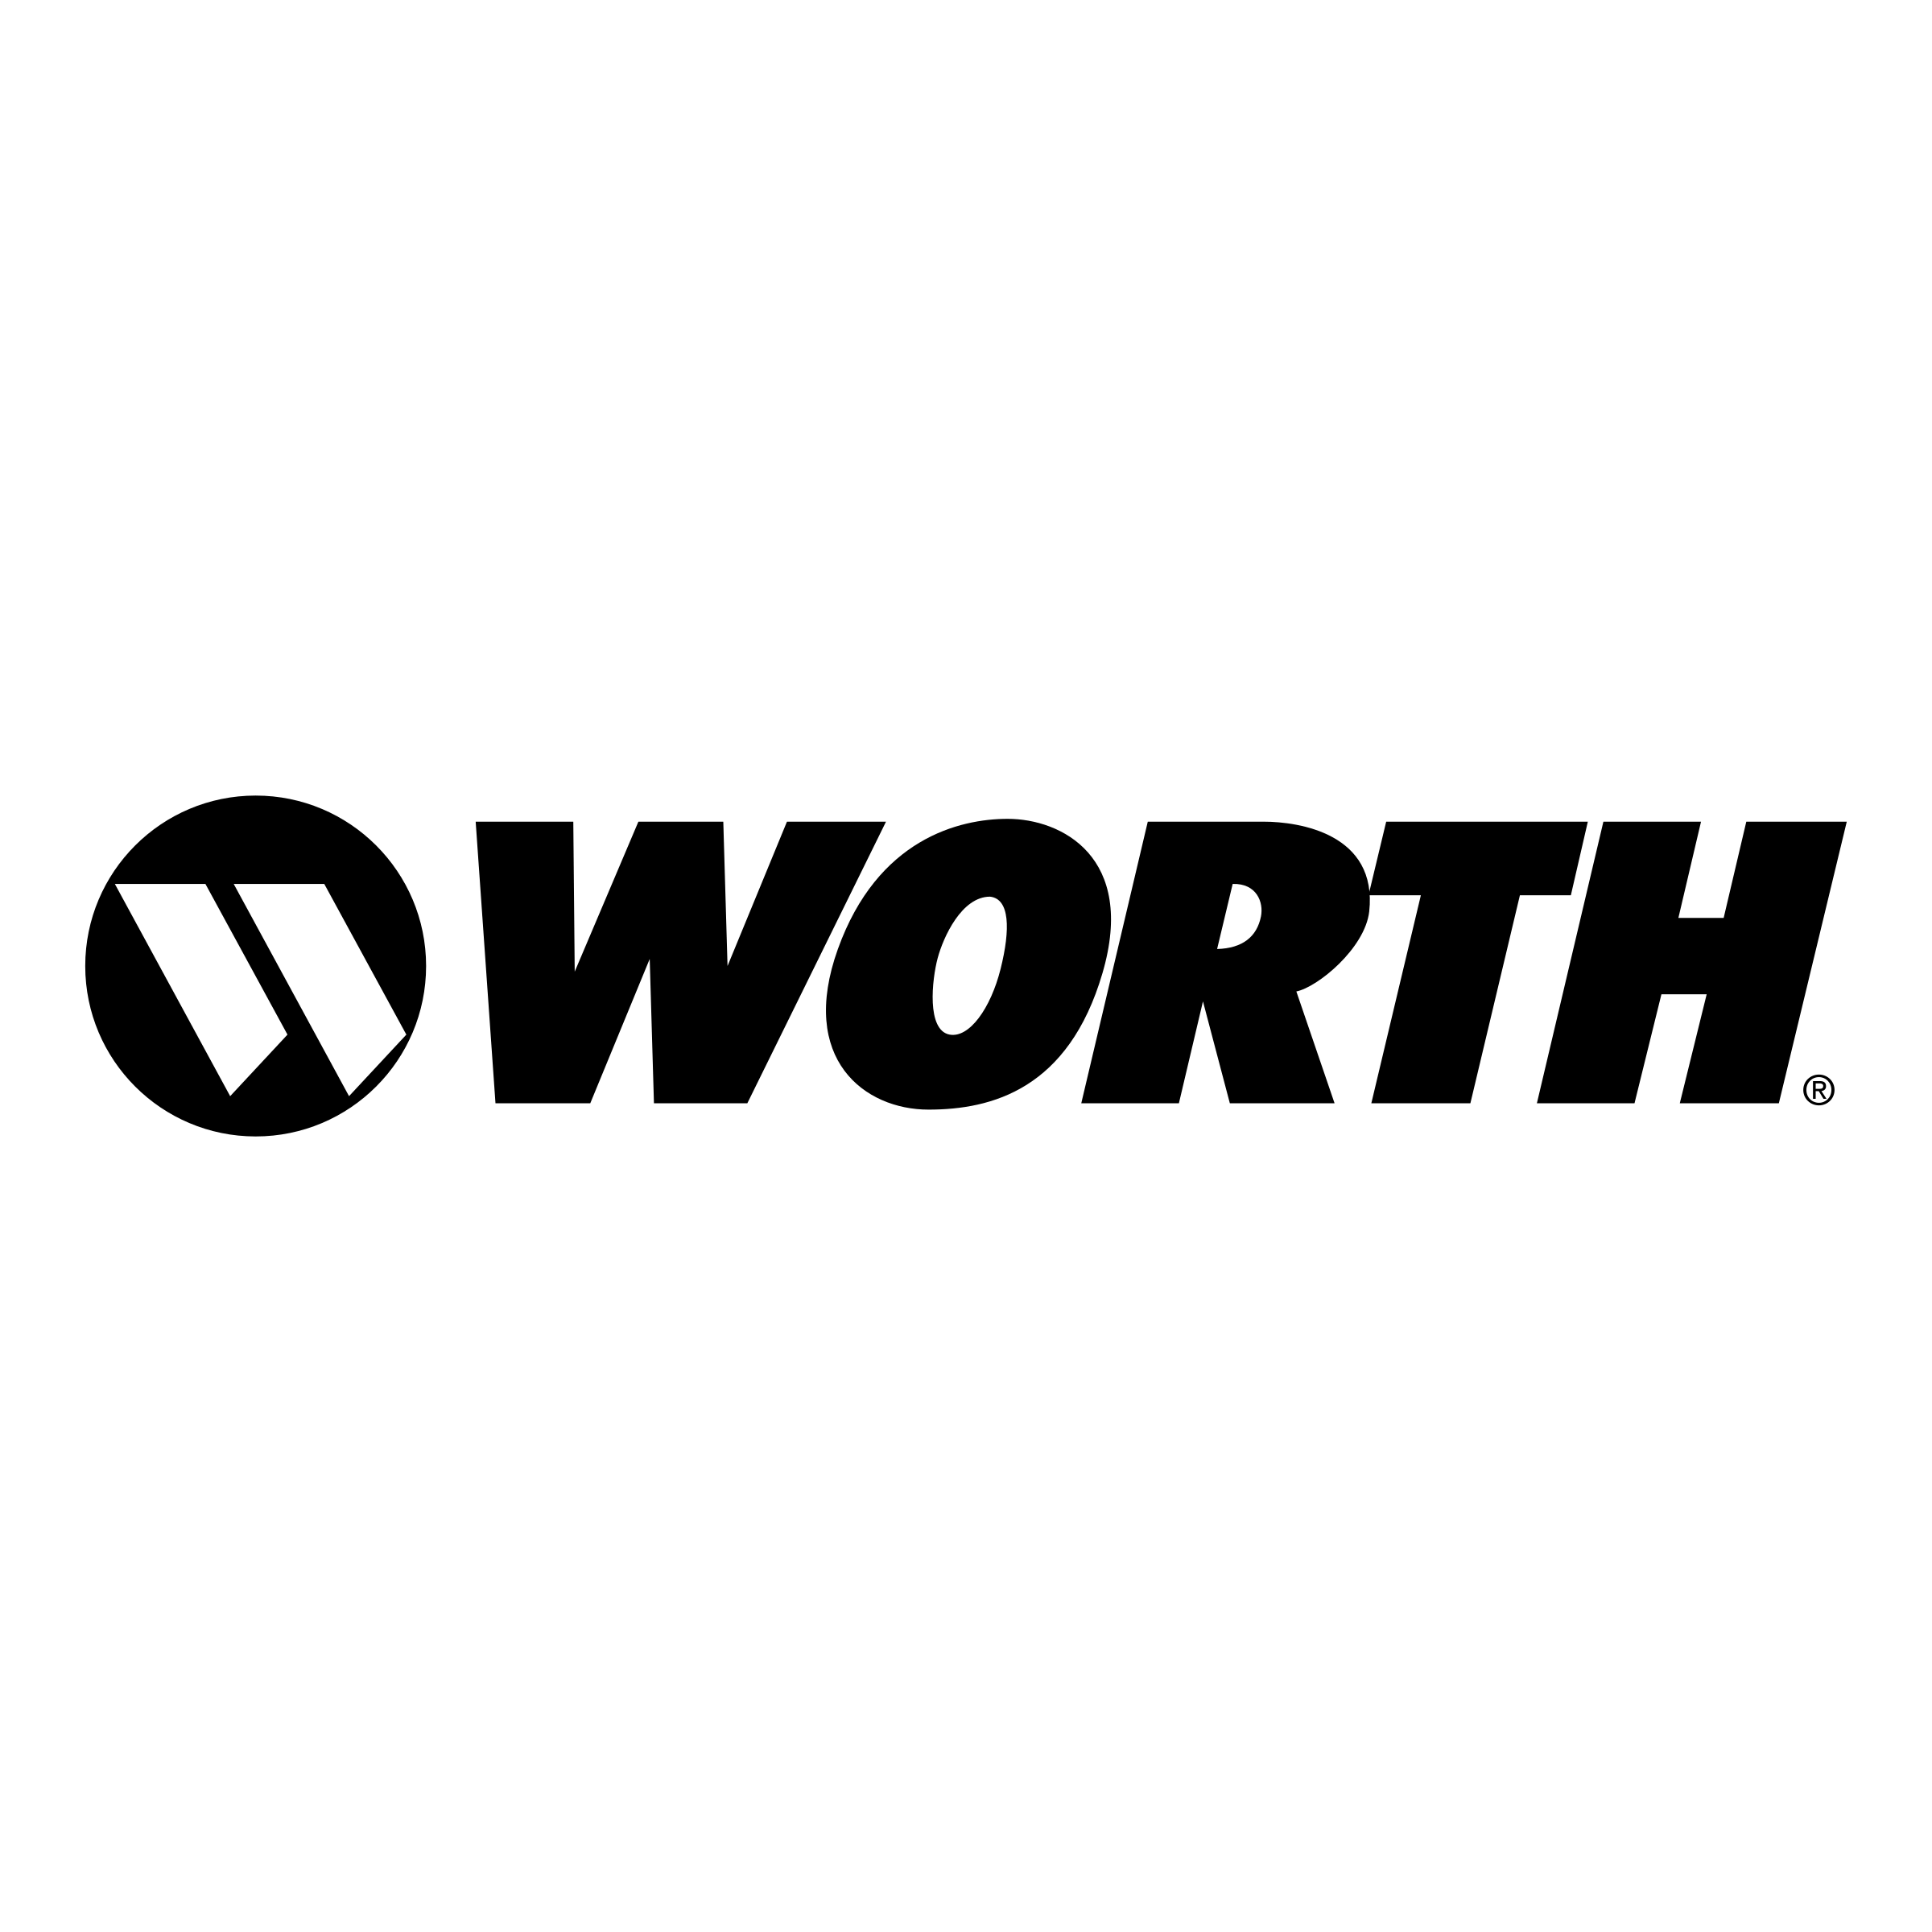 Worth Logo - Worth Logo PNG Transparent & SVG Vector - Freebie Supply